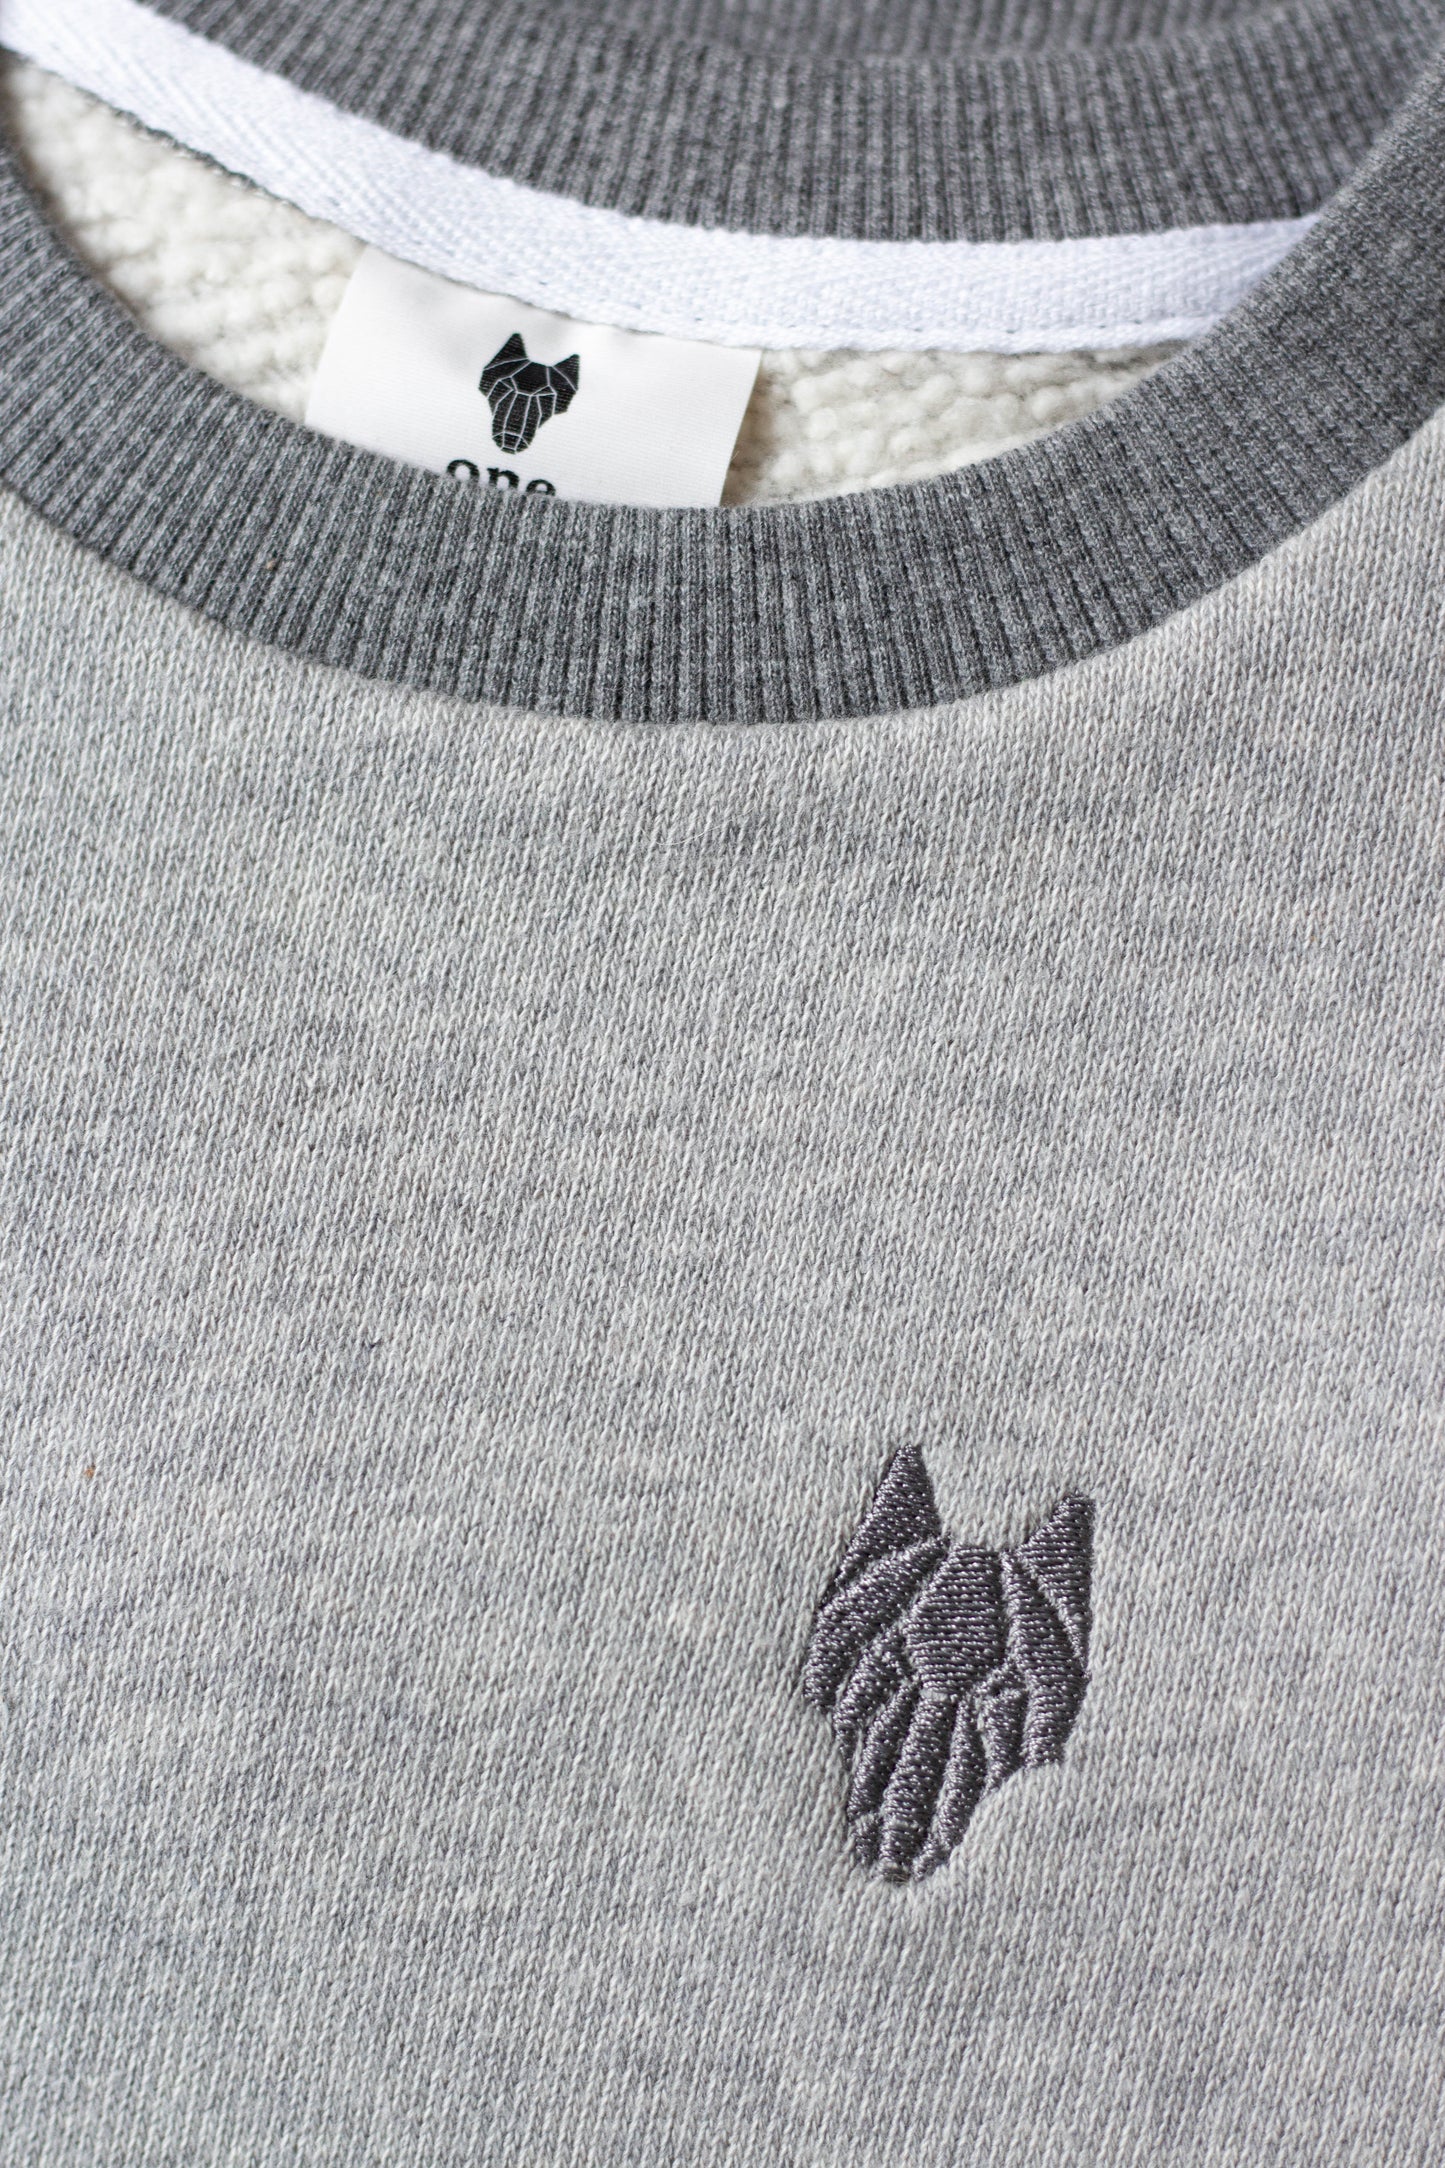 Kid’s One Wolf knitted sweater, grey/dark grey logo